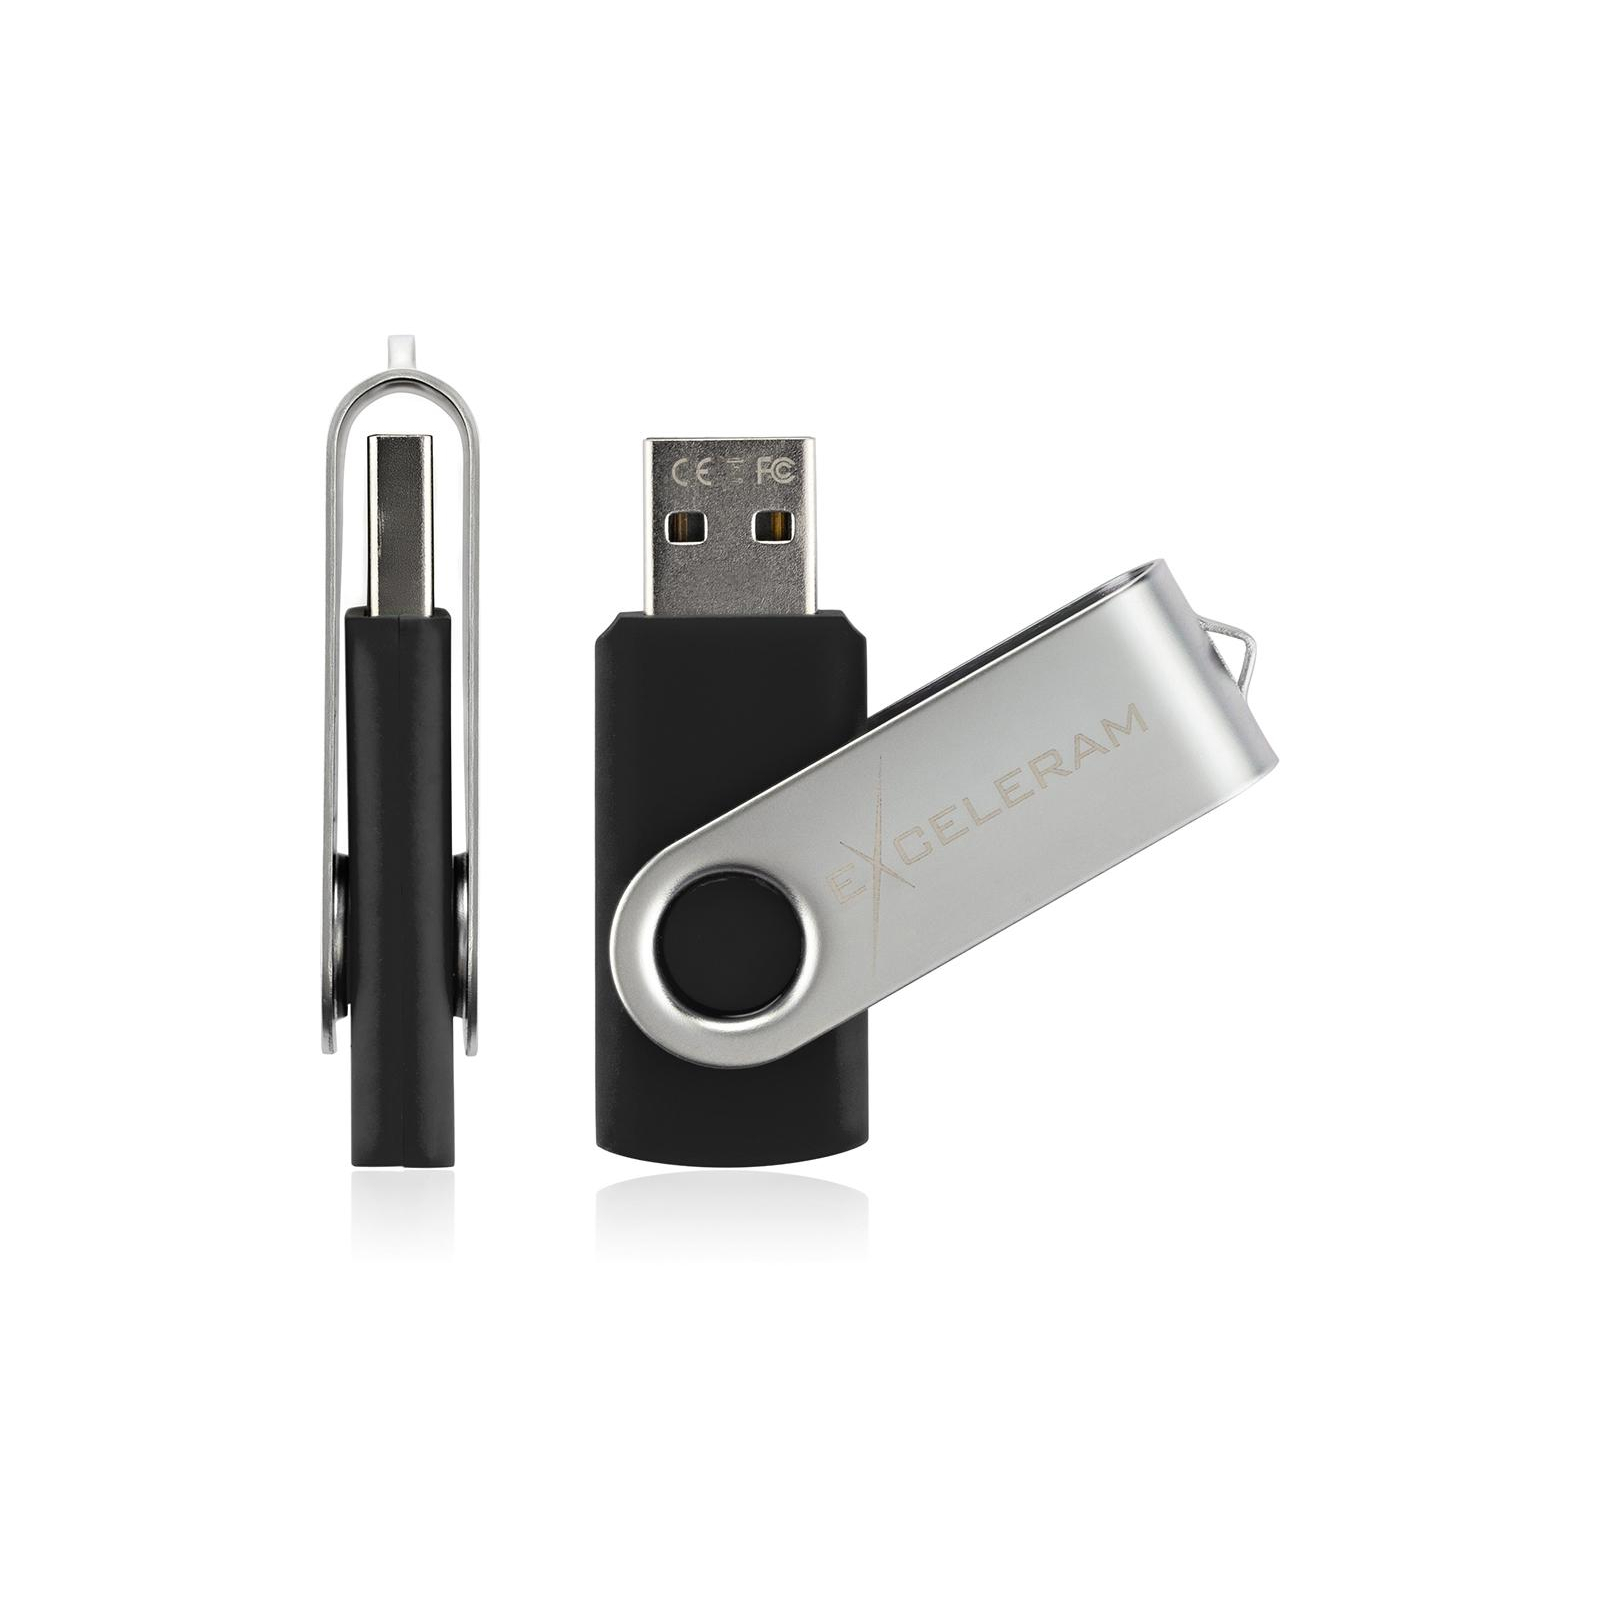 USB флеш накопичувач eXceleram 16GB P1 Series Silver/Purple USB 2.0 (EXP1U2SIPU16) зображення 4